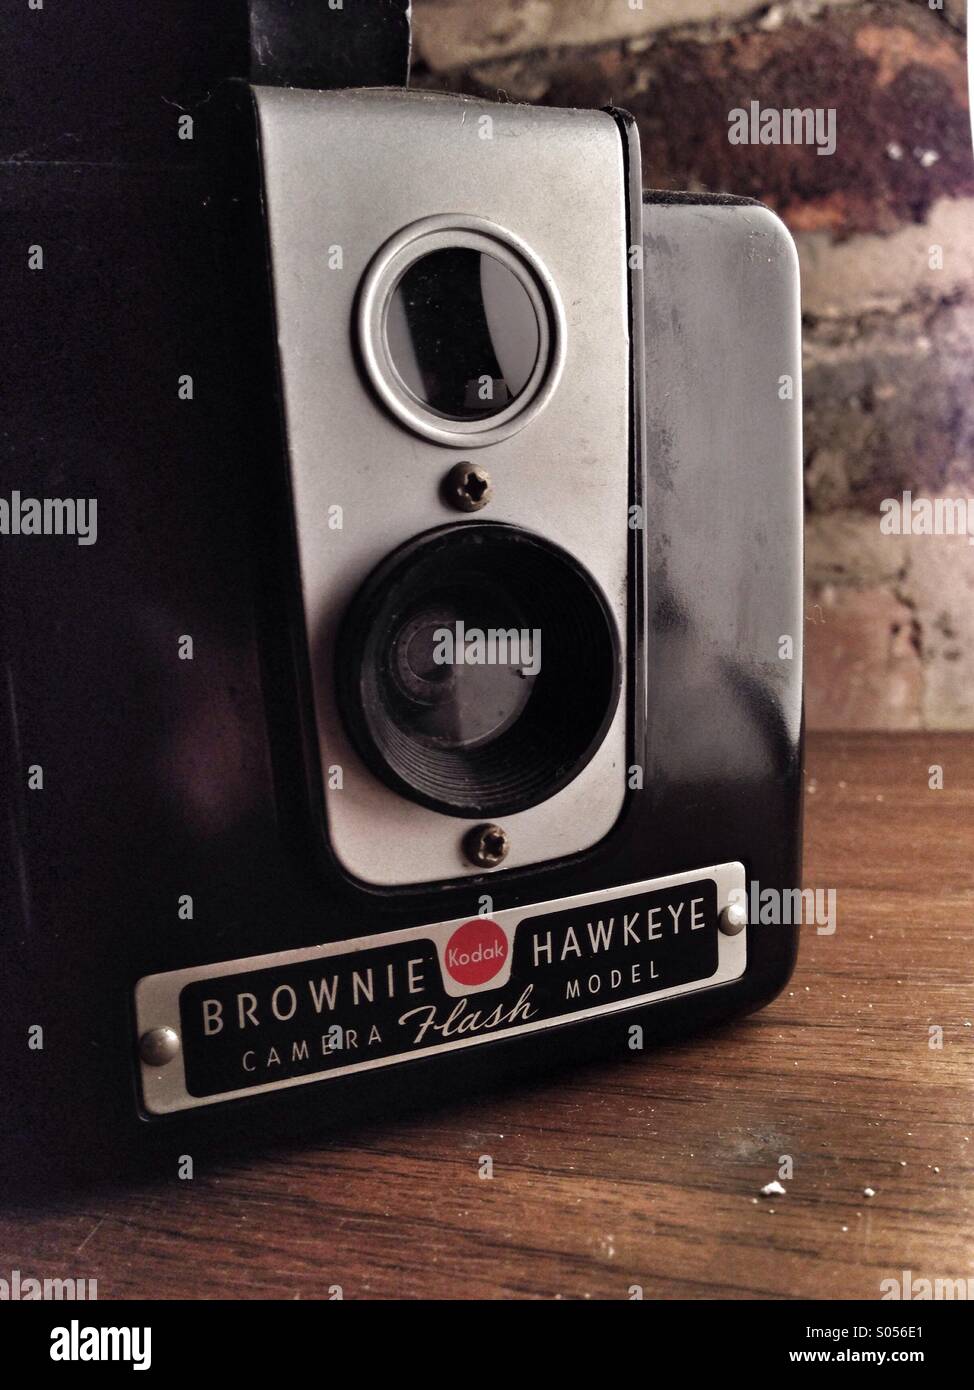 Brownie-Hawkeye-Kamera Stockfoto